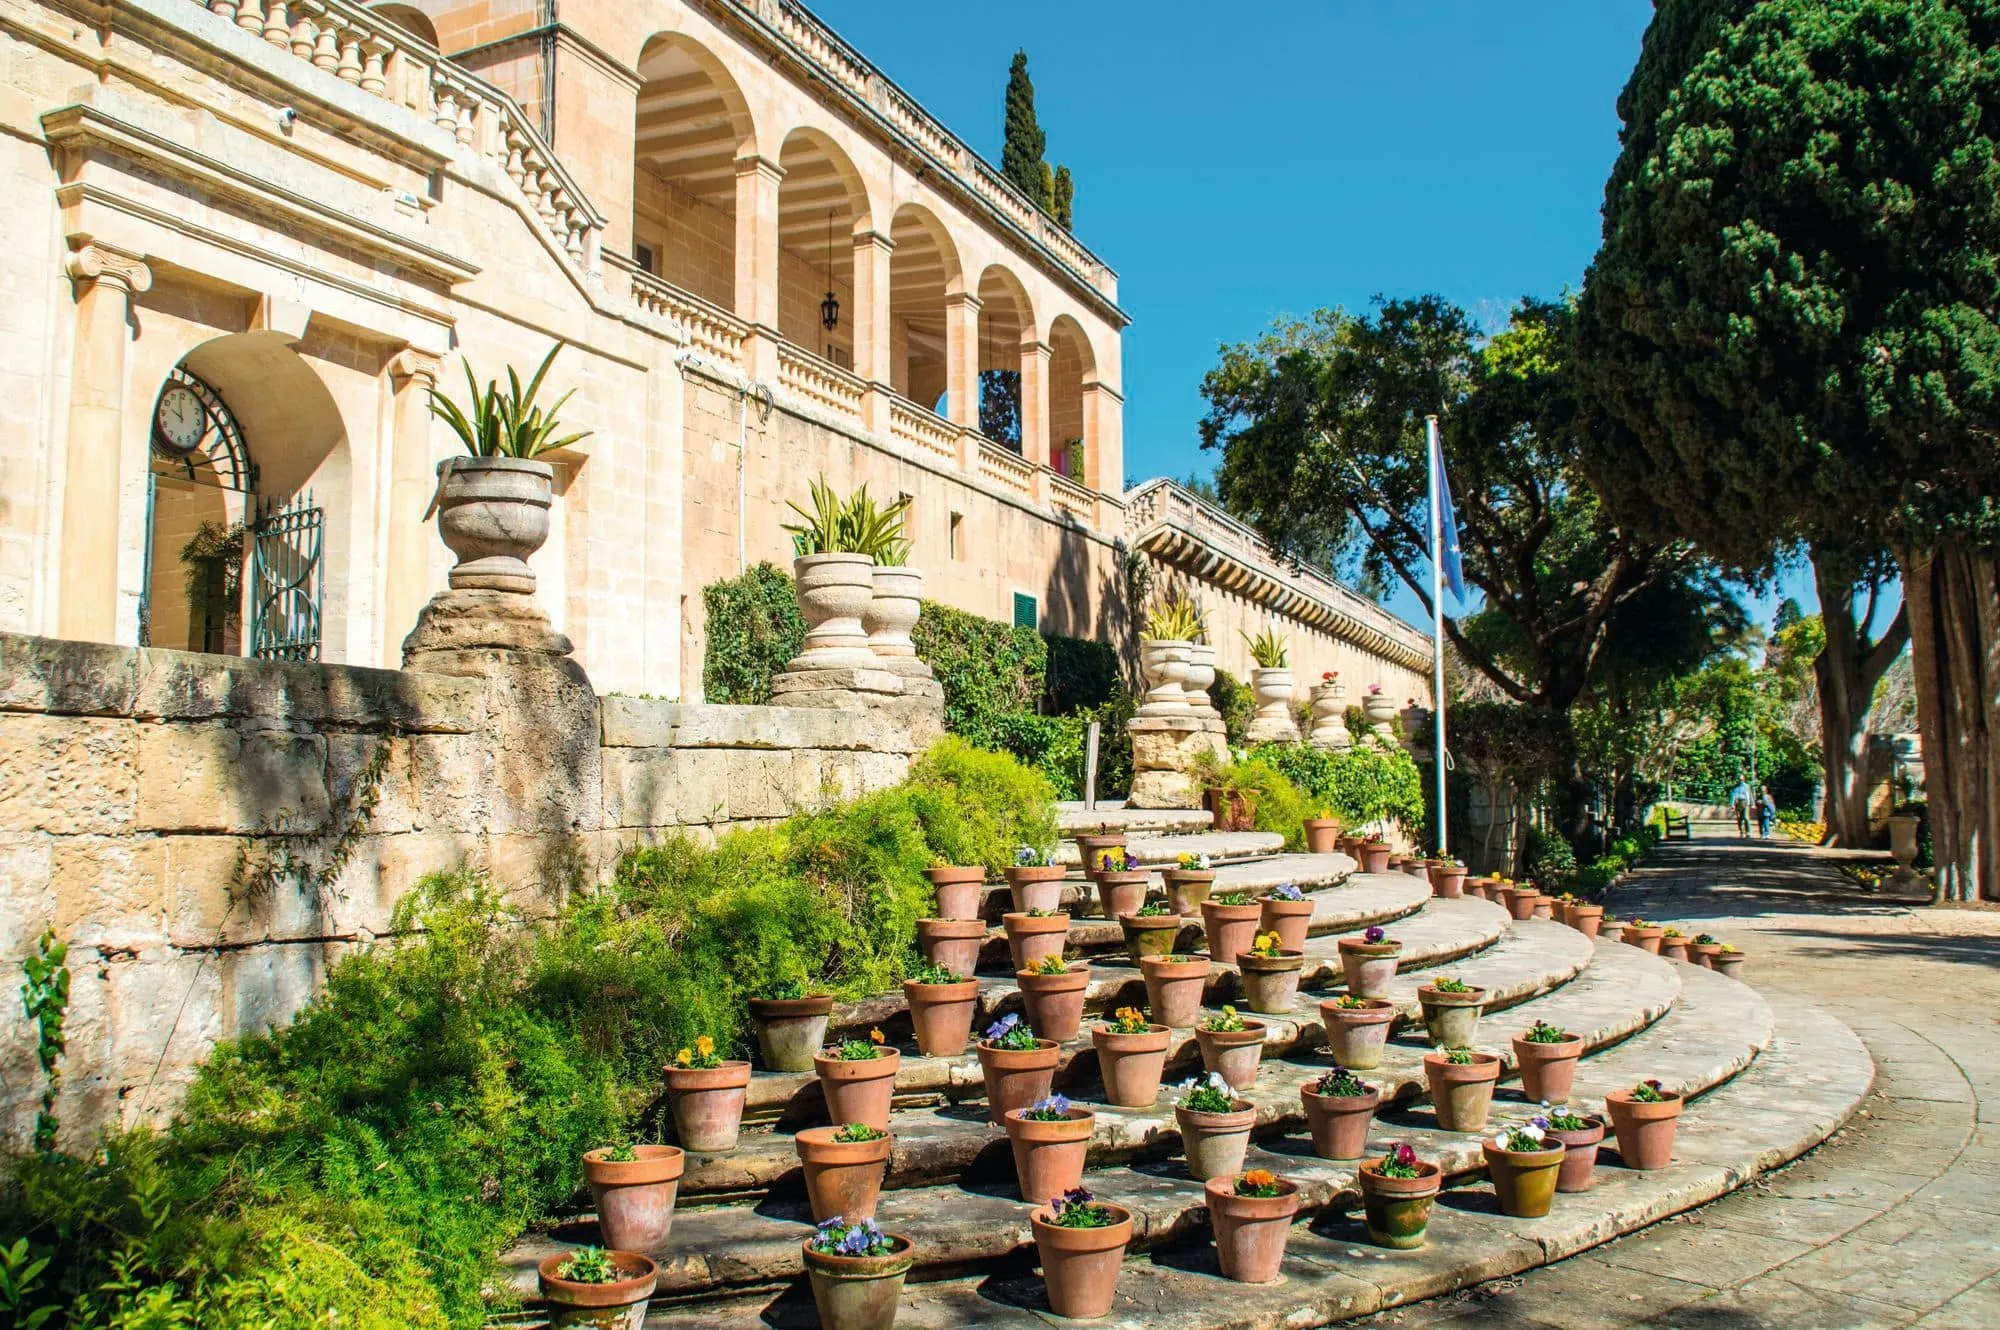 San Anton Gardens in Malta, Europe | Gardens - Rated 4